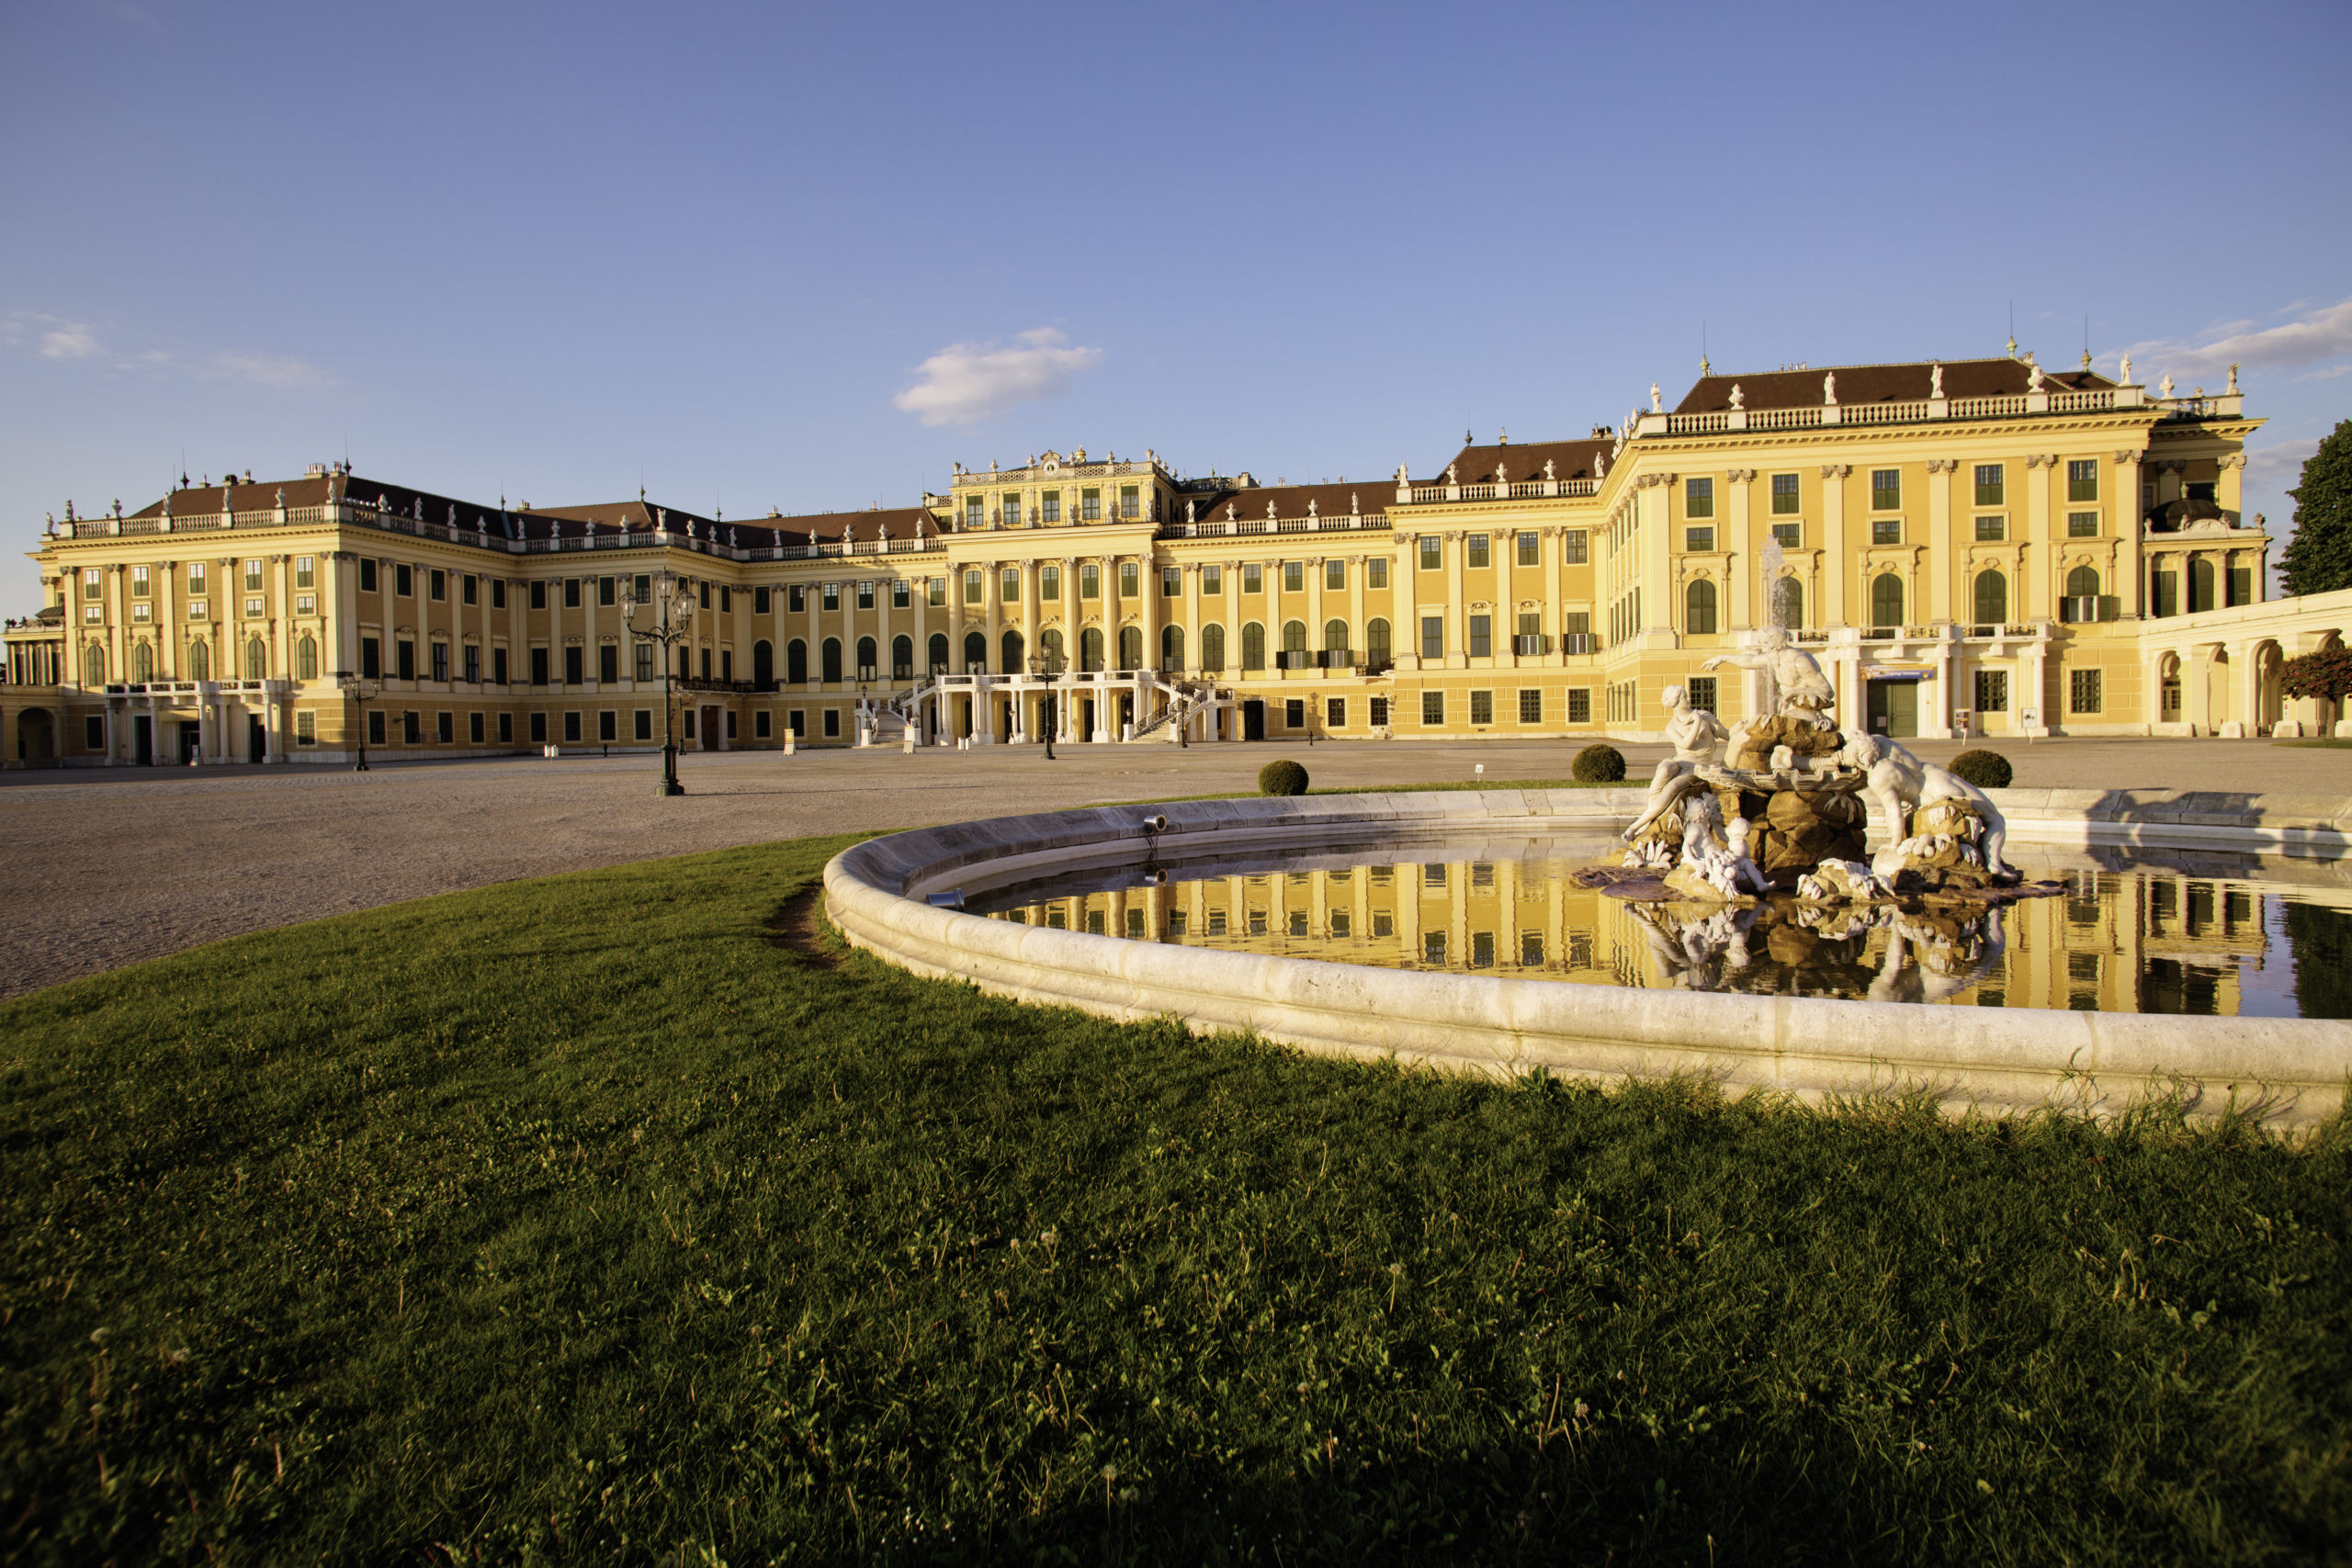 Schönbrunn Palace is the most popular sight in Vienna